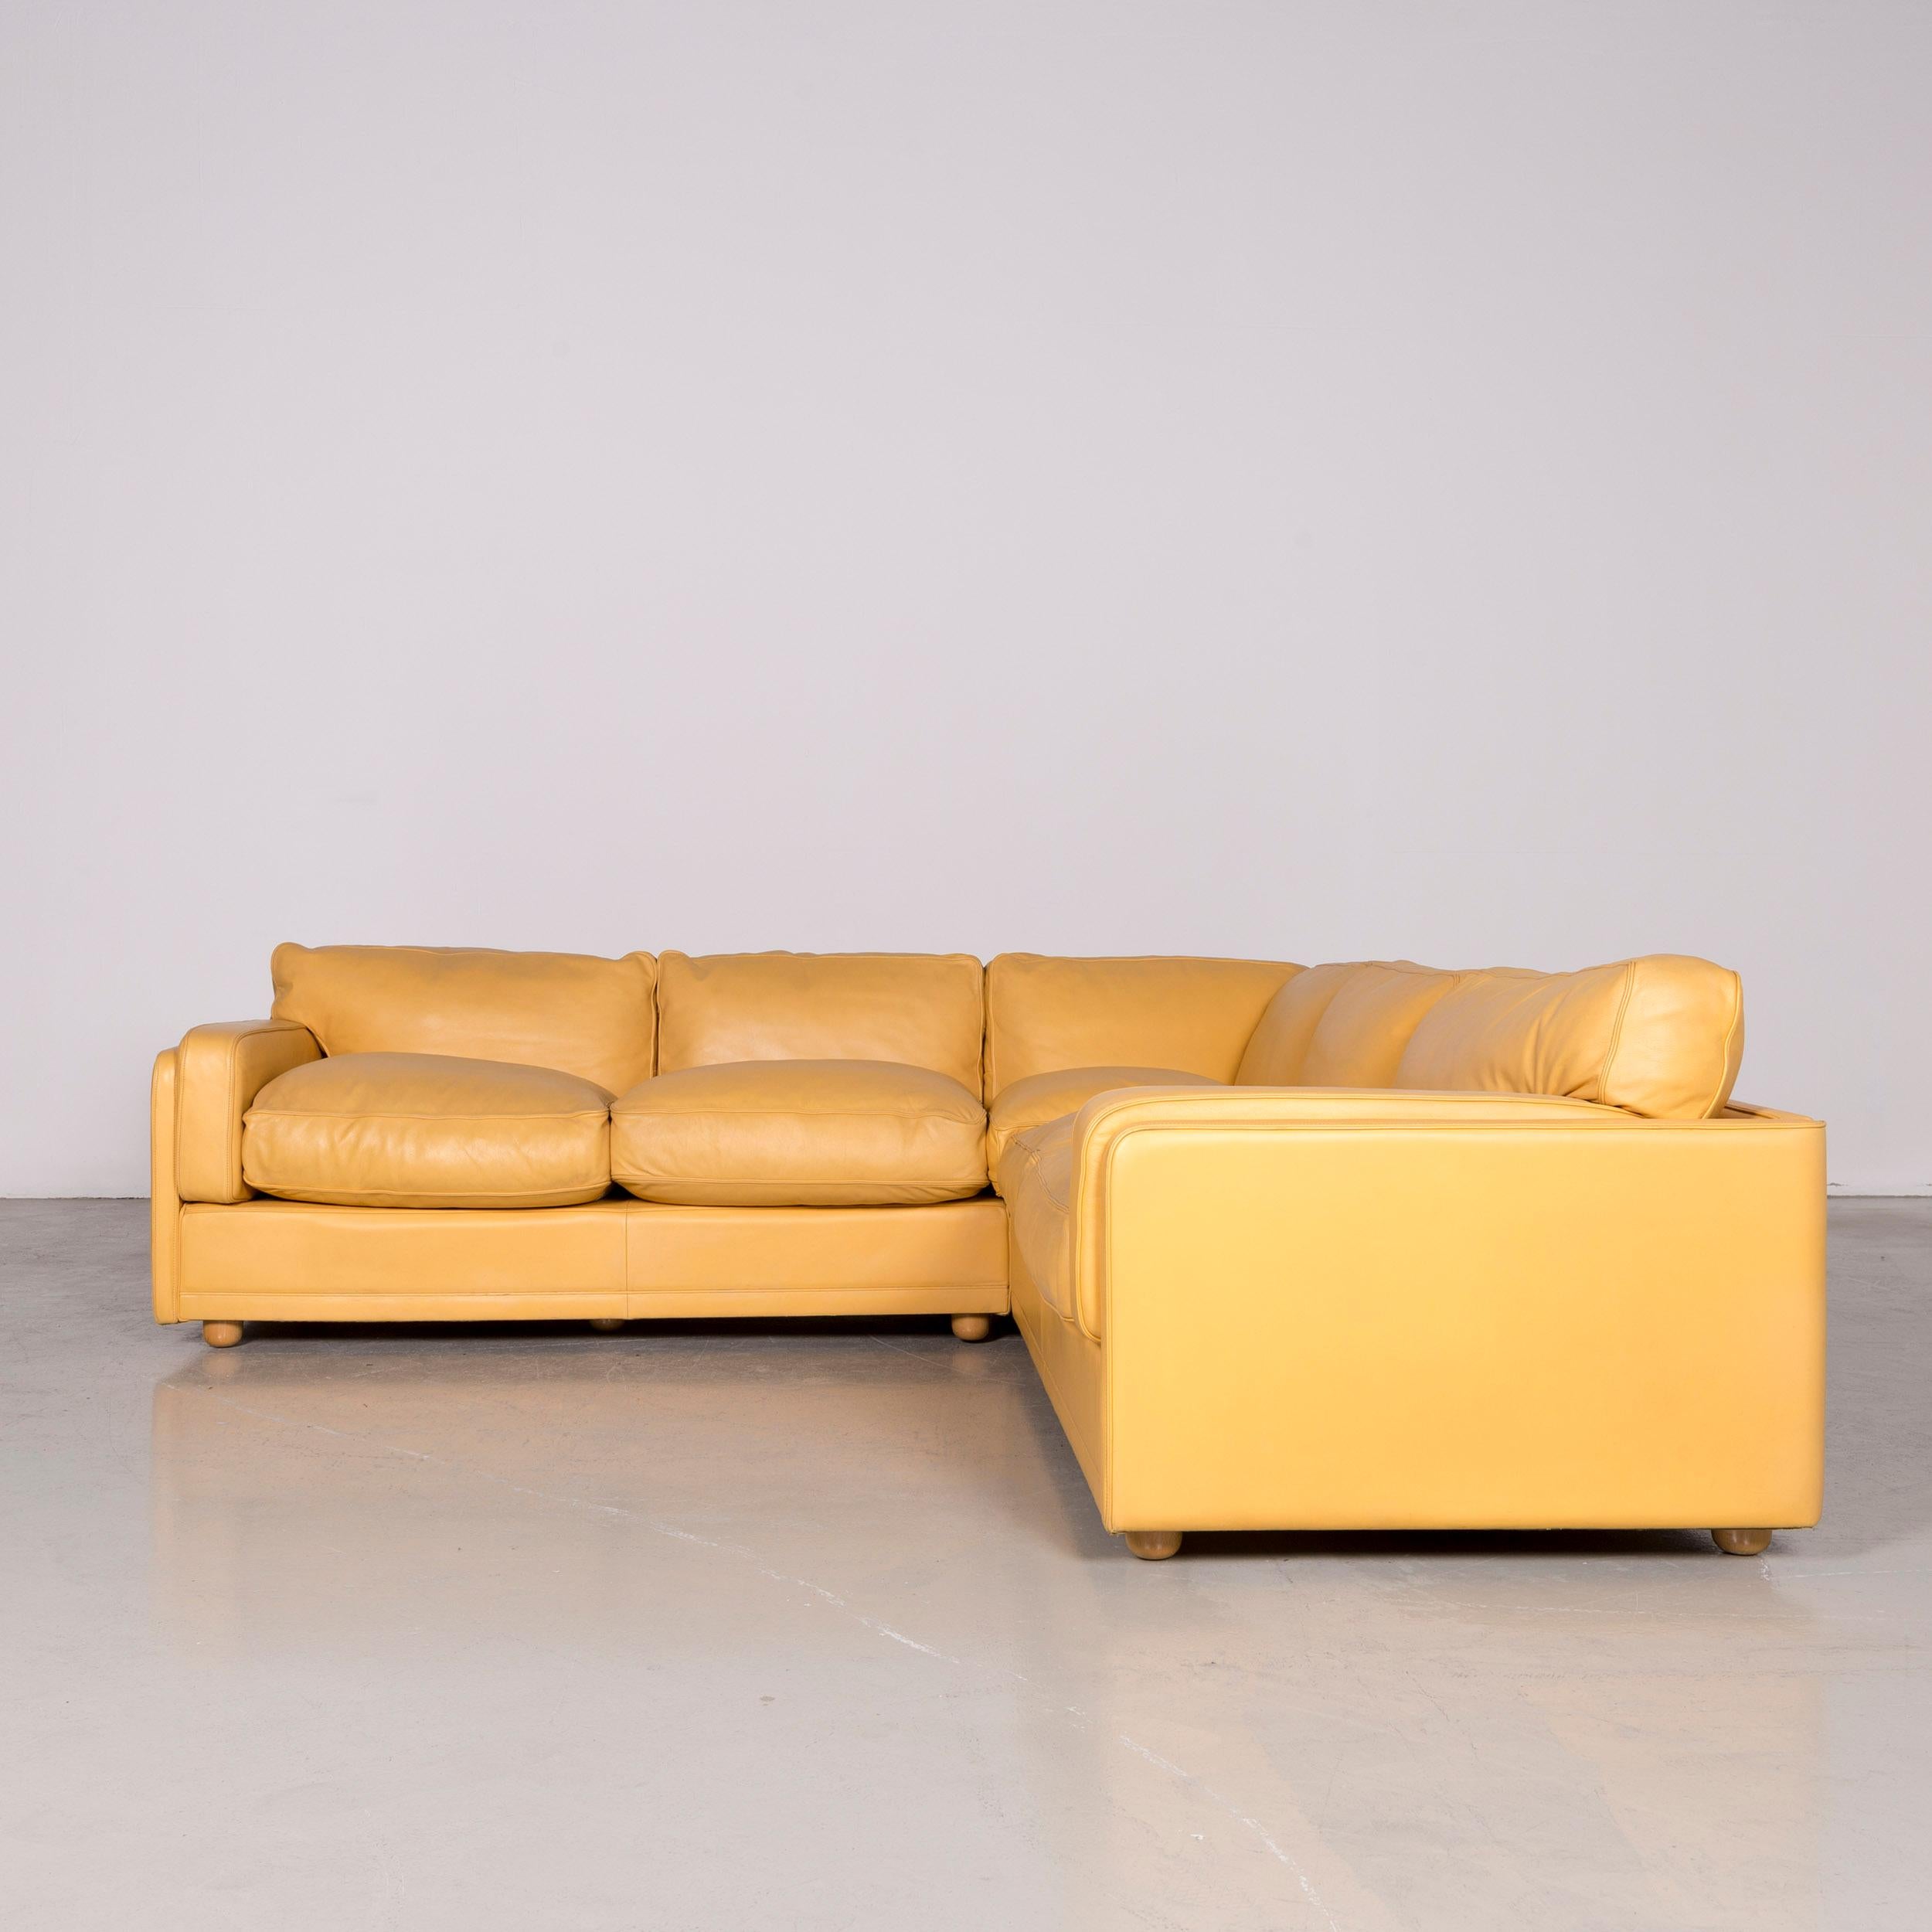 Poltrona Frau Designer Leather Corner Couch Sofa Yellow In Good Condition For Sale In Cologne, DE